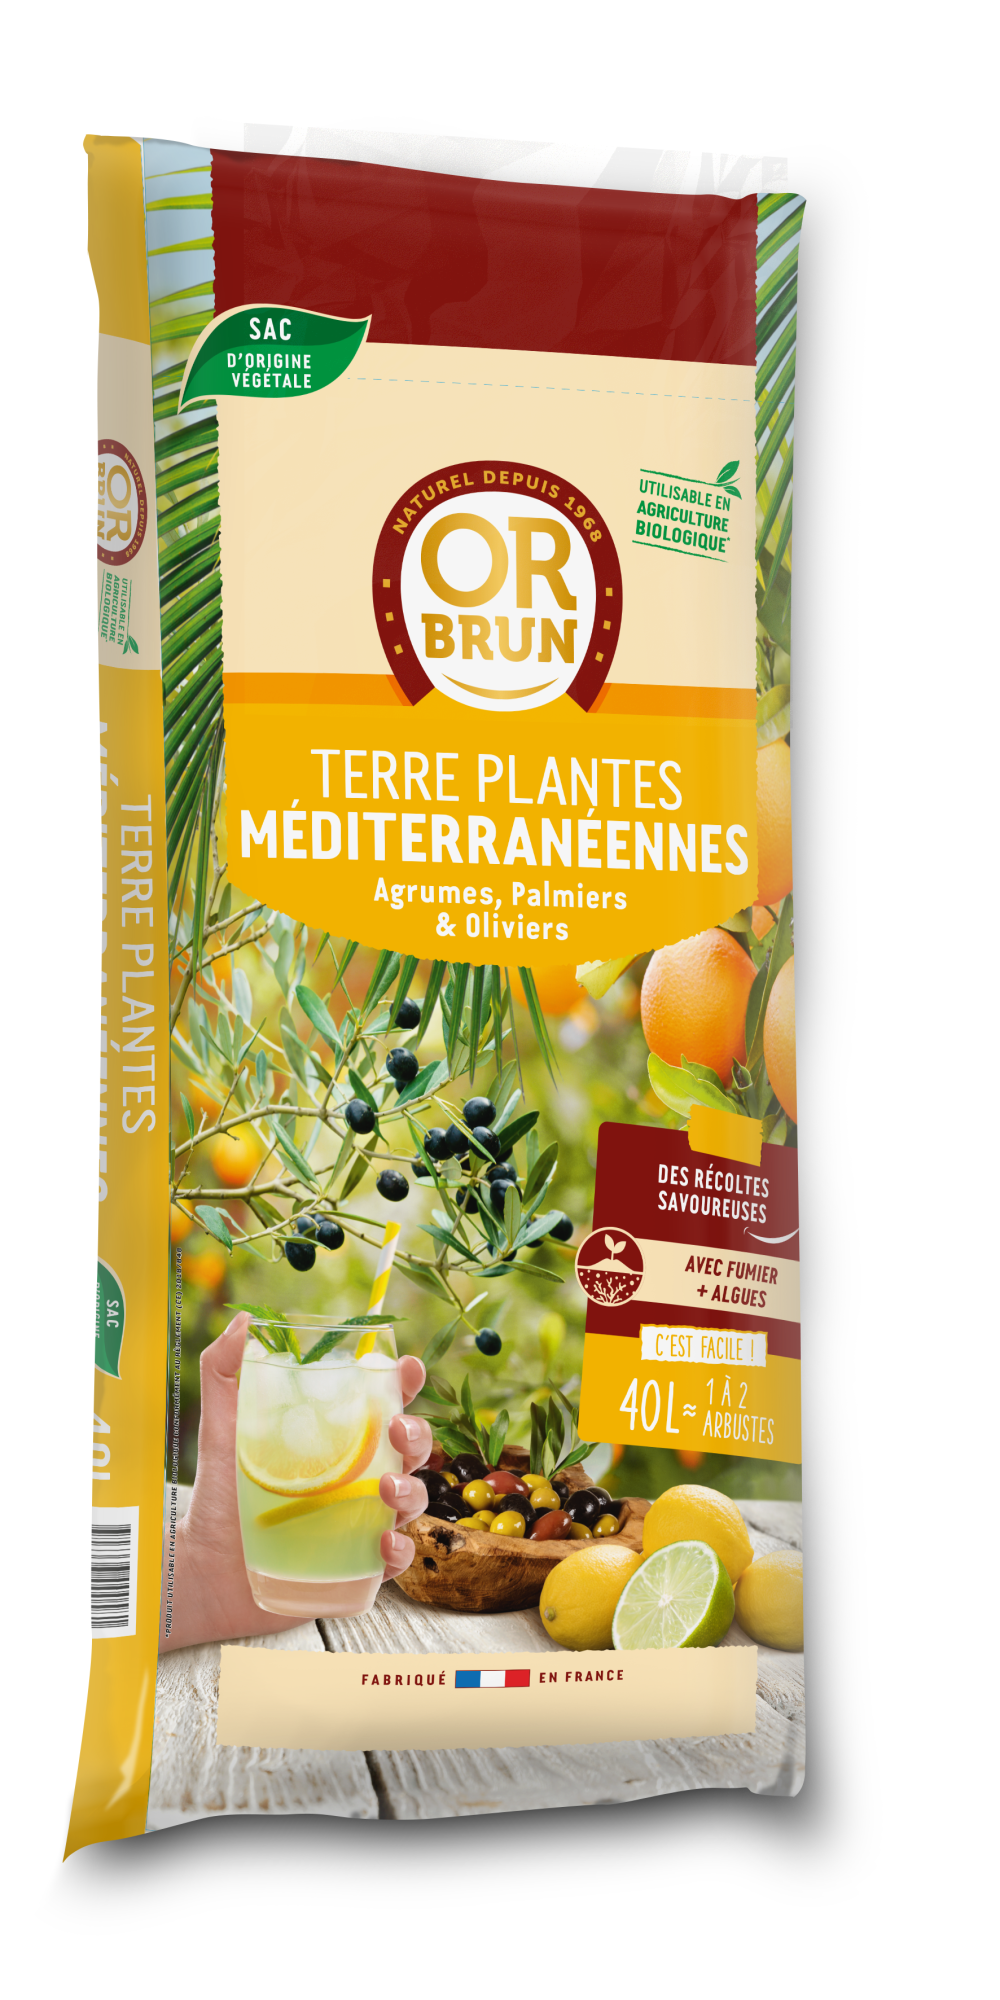 Terreau agrumes et plantes méditerranéennes botanic® - 70 L : Terres jardin  Botanic® jardin - botanic®